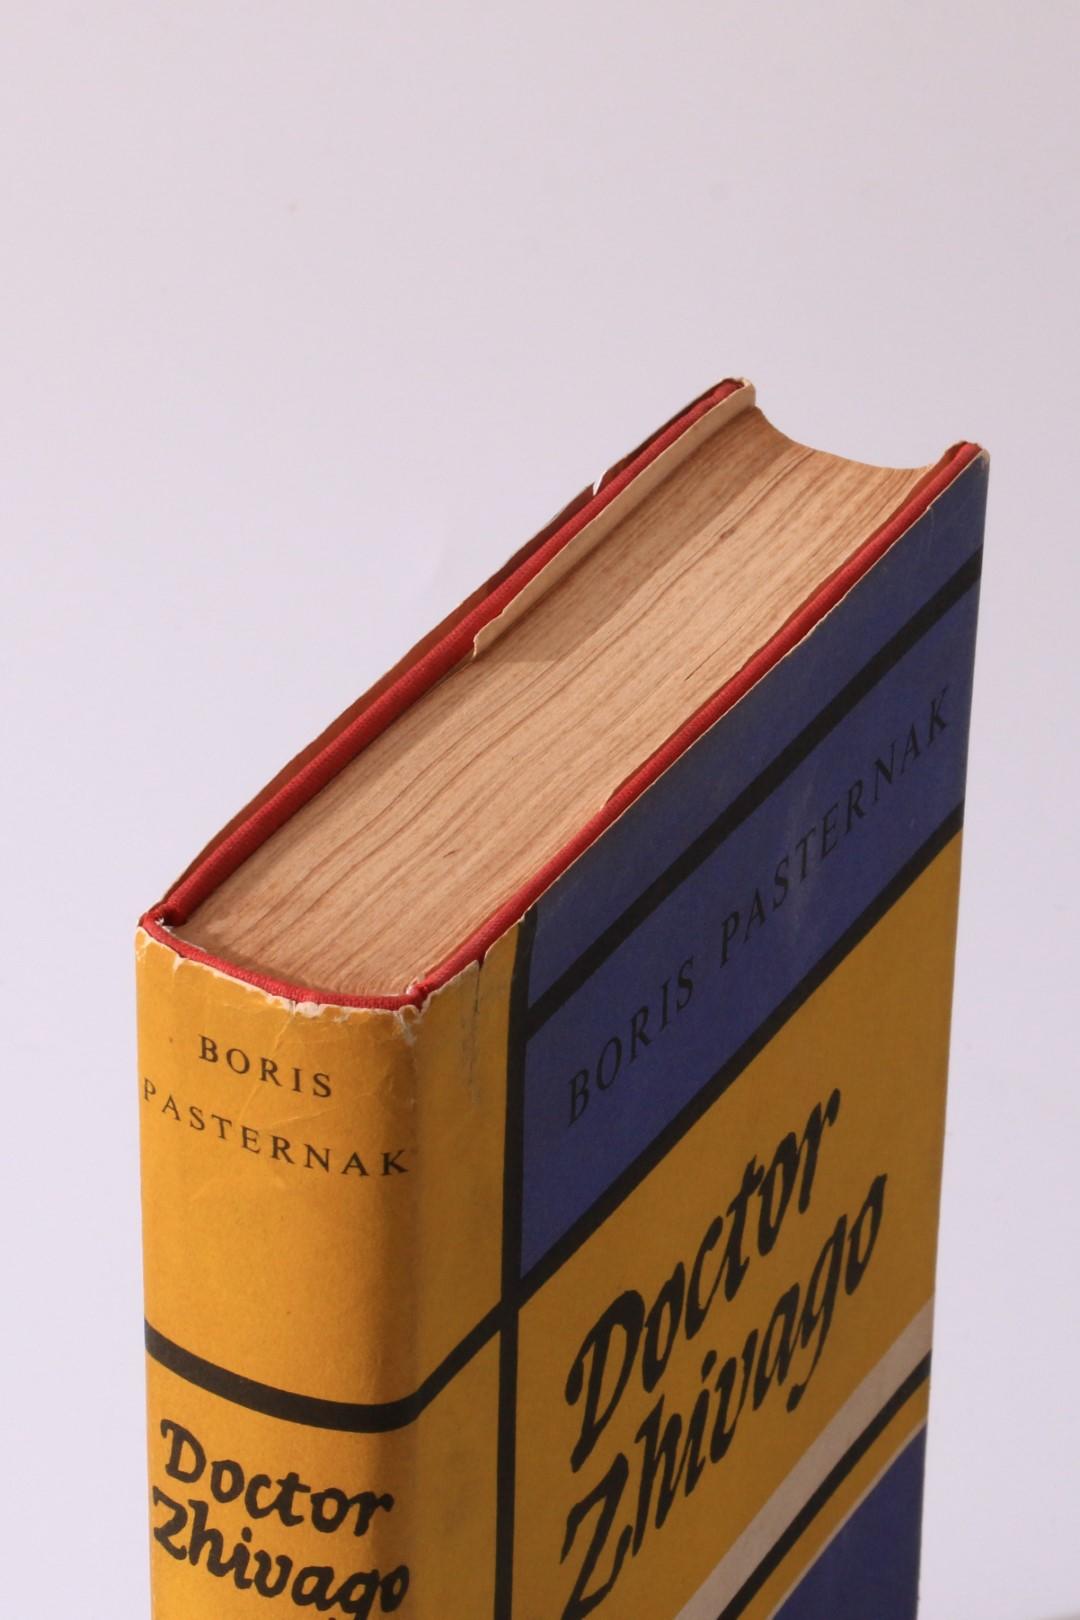 Boris Pasternak - Doctor Zhivago - Collins Harvill, 1958, First Edition.